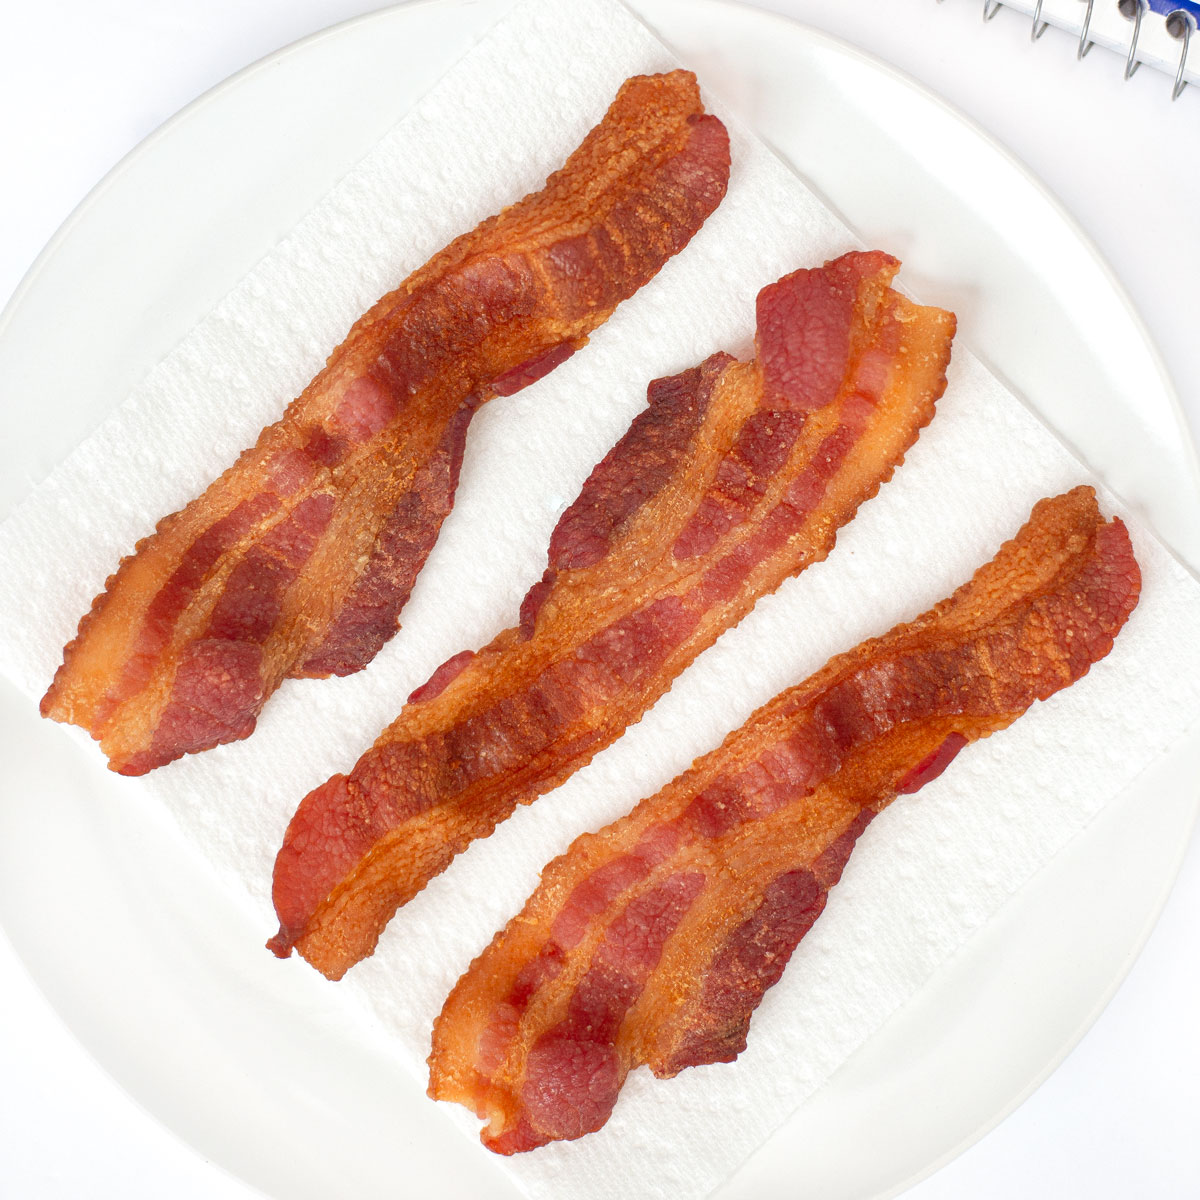 https://dormroomcook.com/wp-content/uploads/2020/04/Microwave-Bacon-1x1-1.jpg